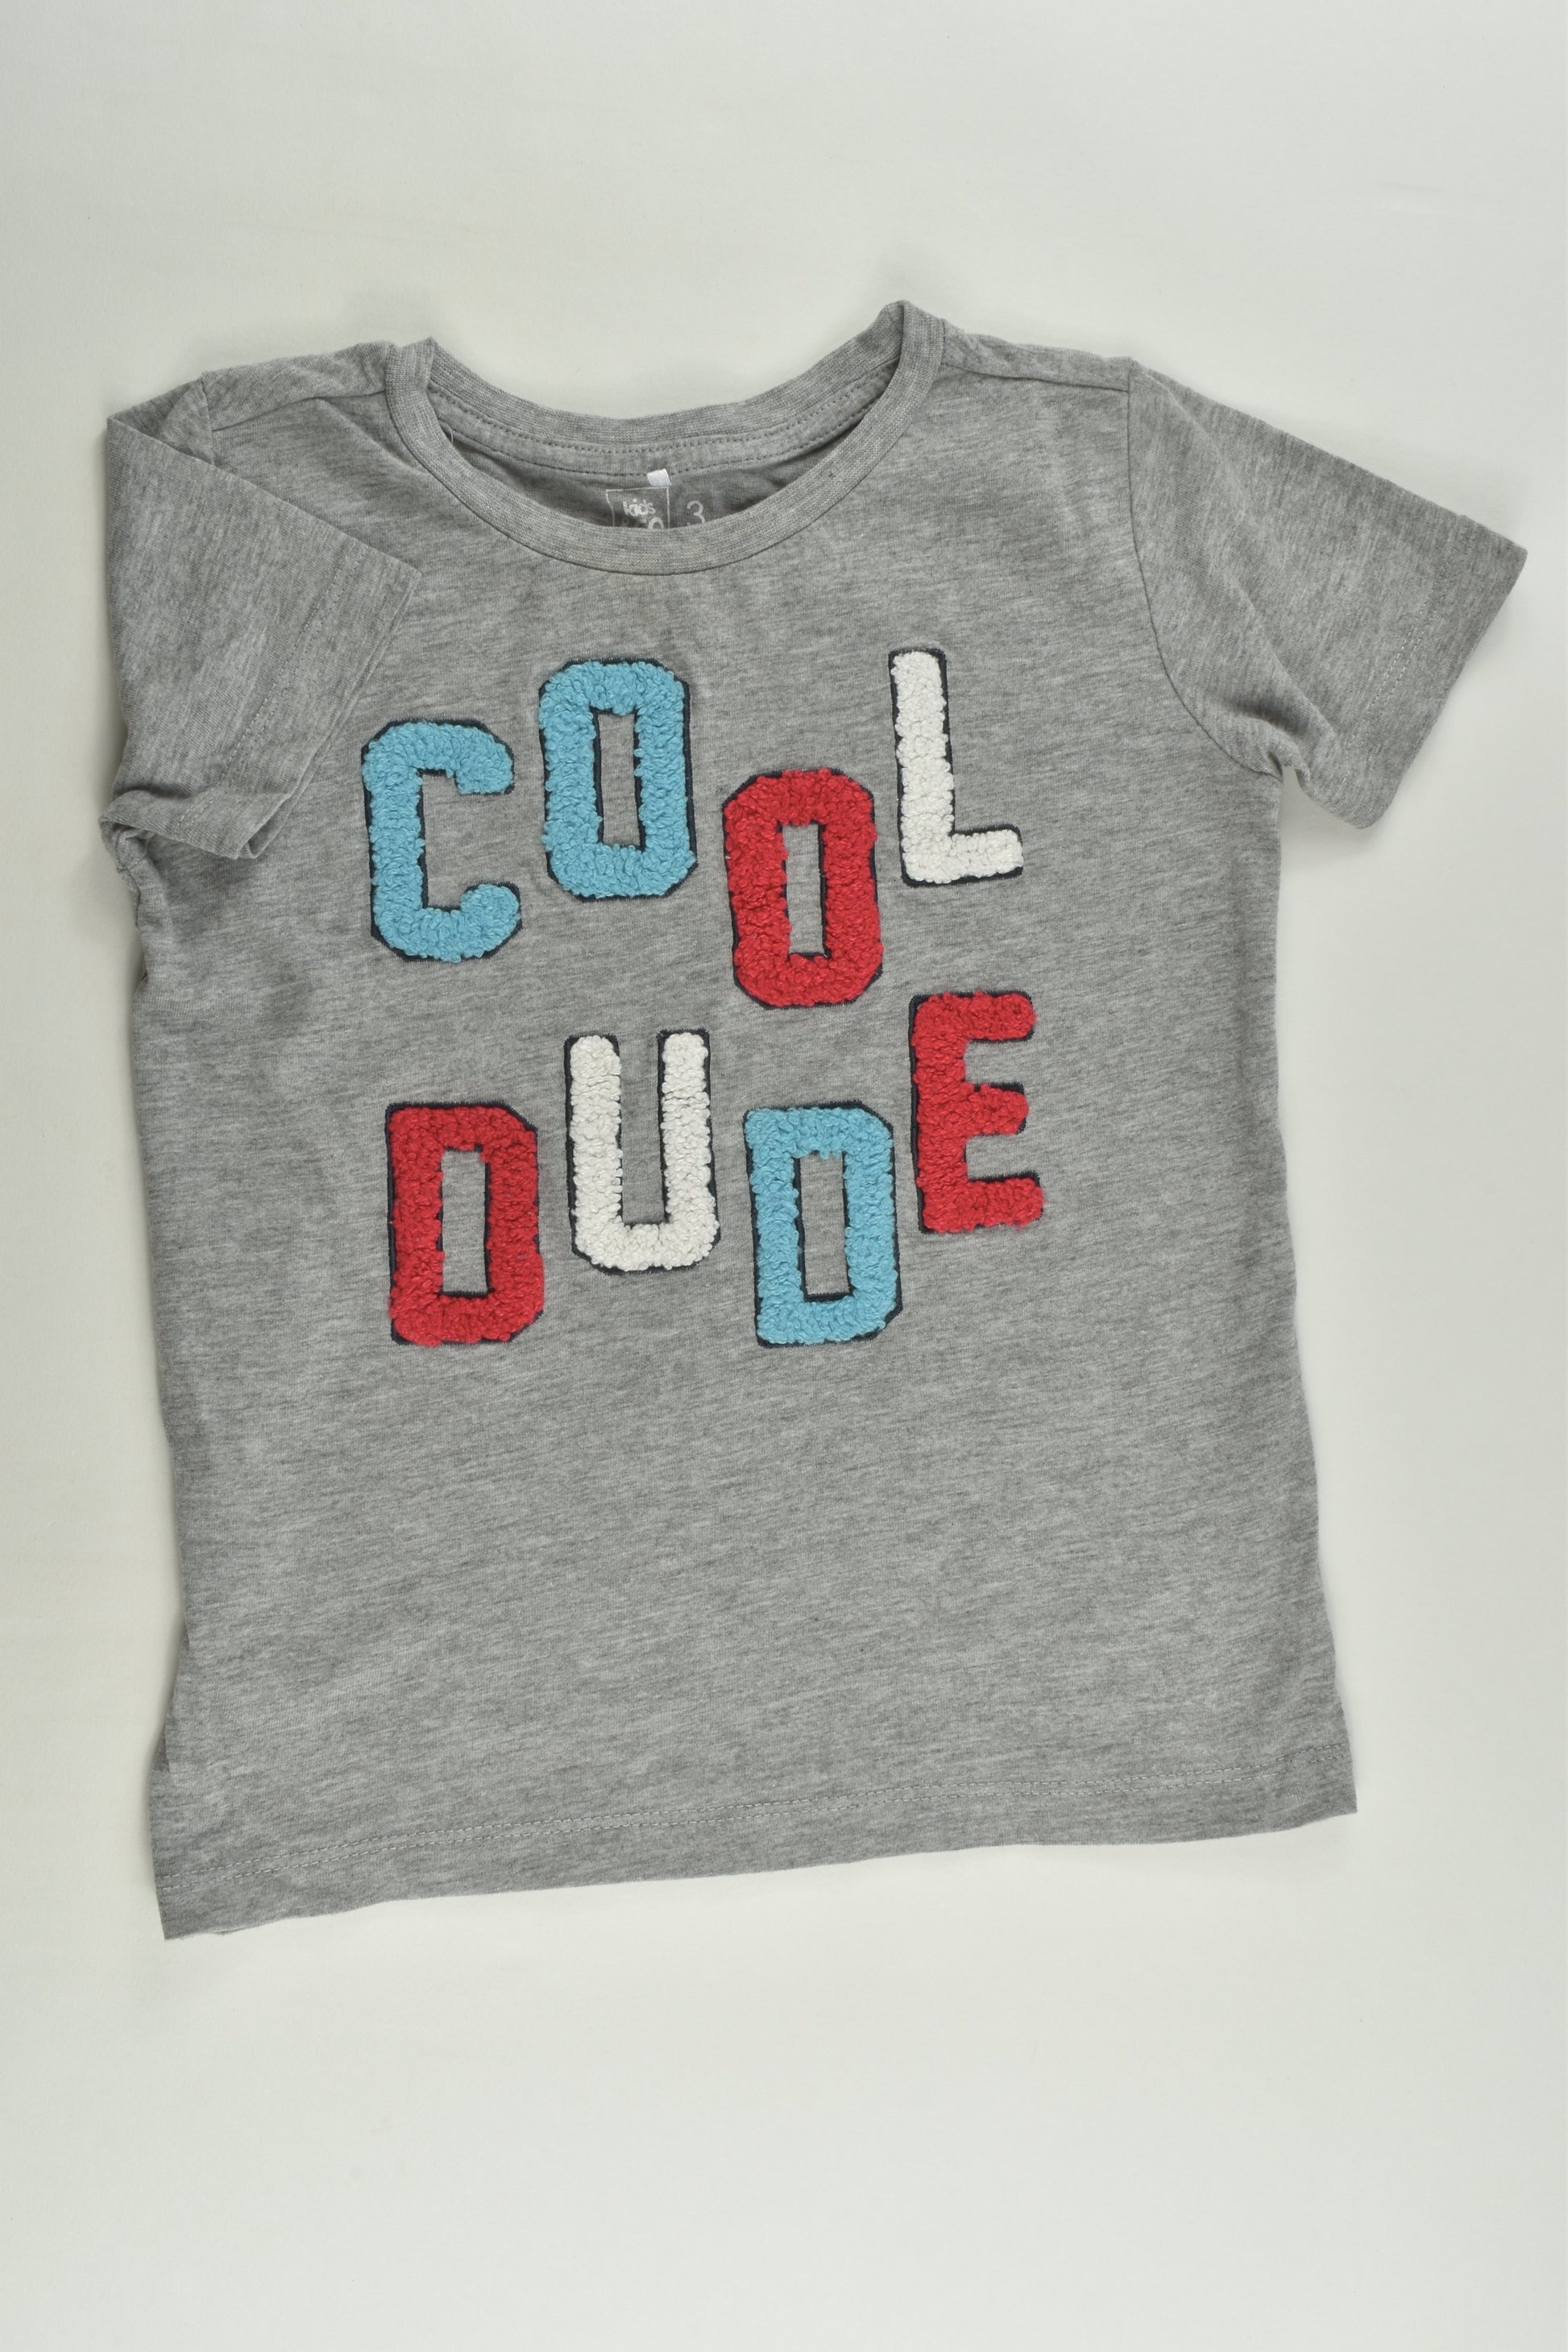 Kids & Co Size 3 'Cool Dude' T-shirt